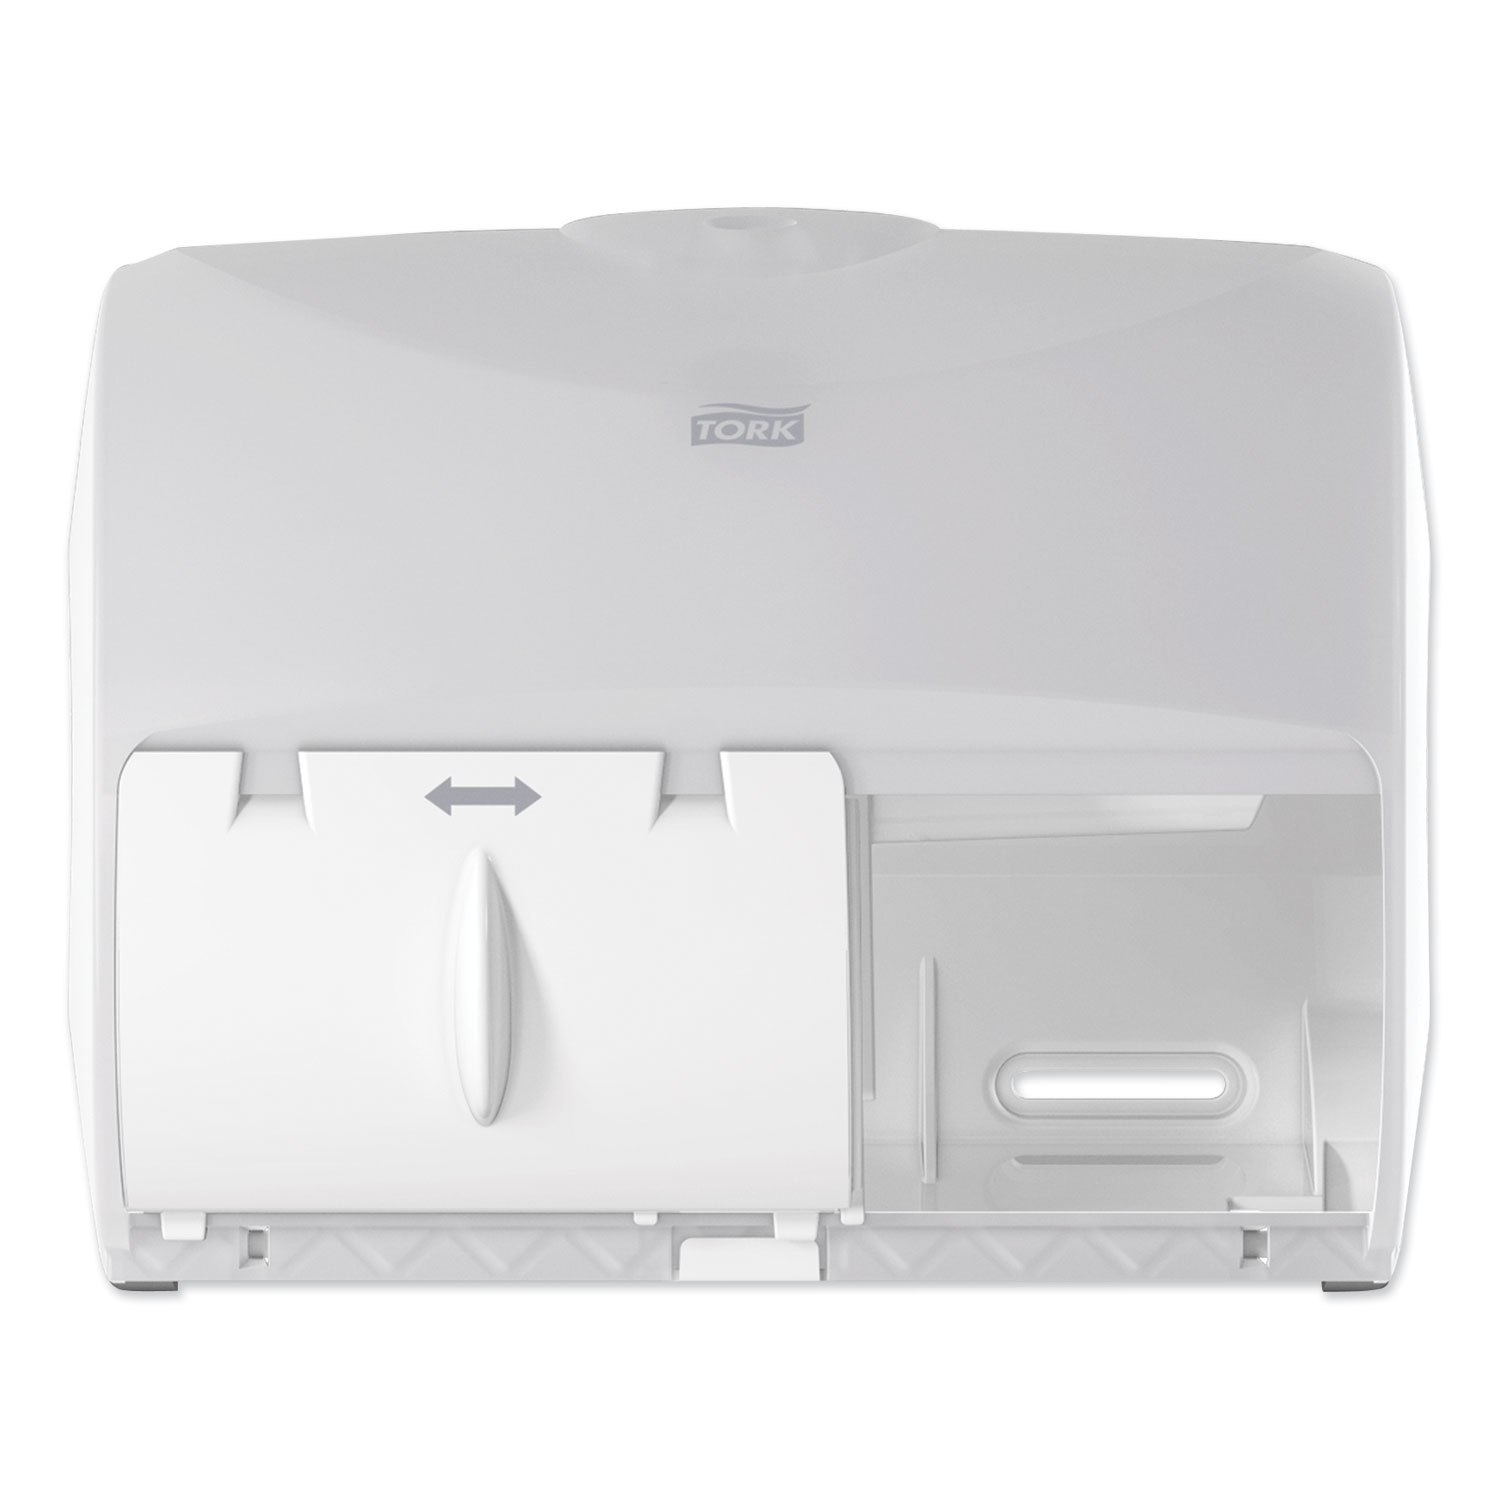  Tork 565720 Twin Bath Tissue Roll Dispenser for OptiCore,11.06 x 7.18 x 8.81, White (TRK565720) 